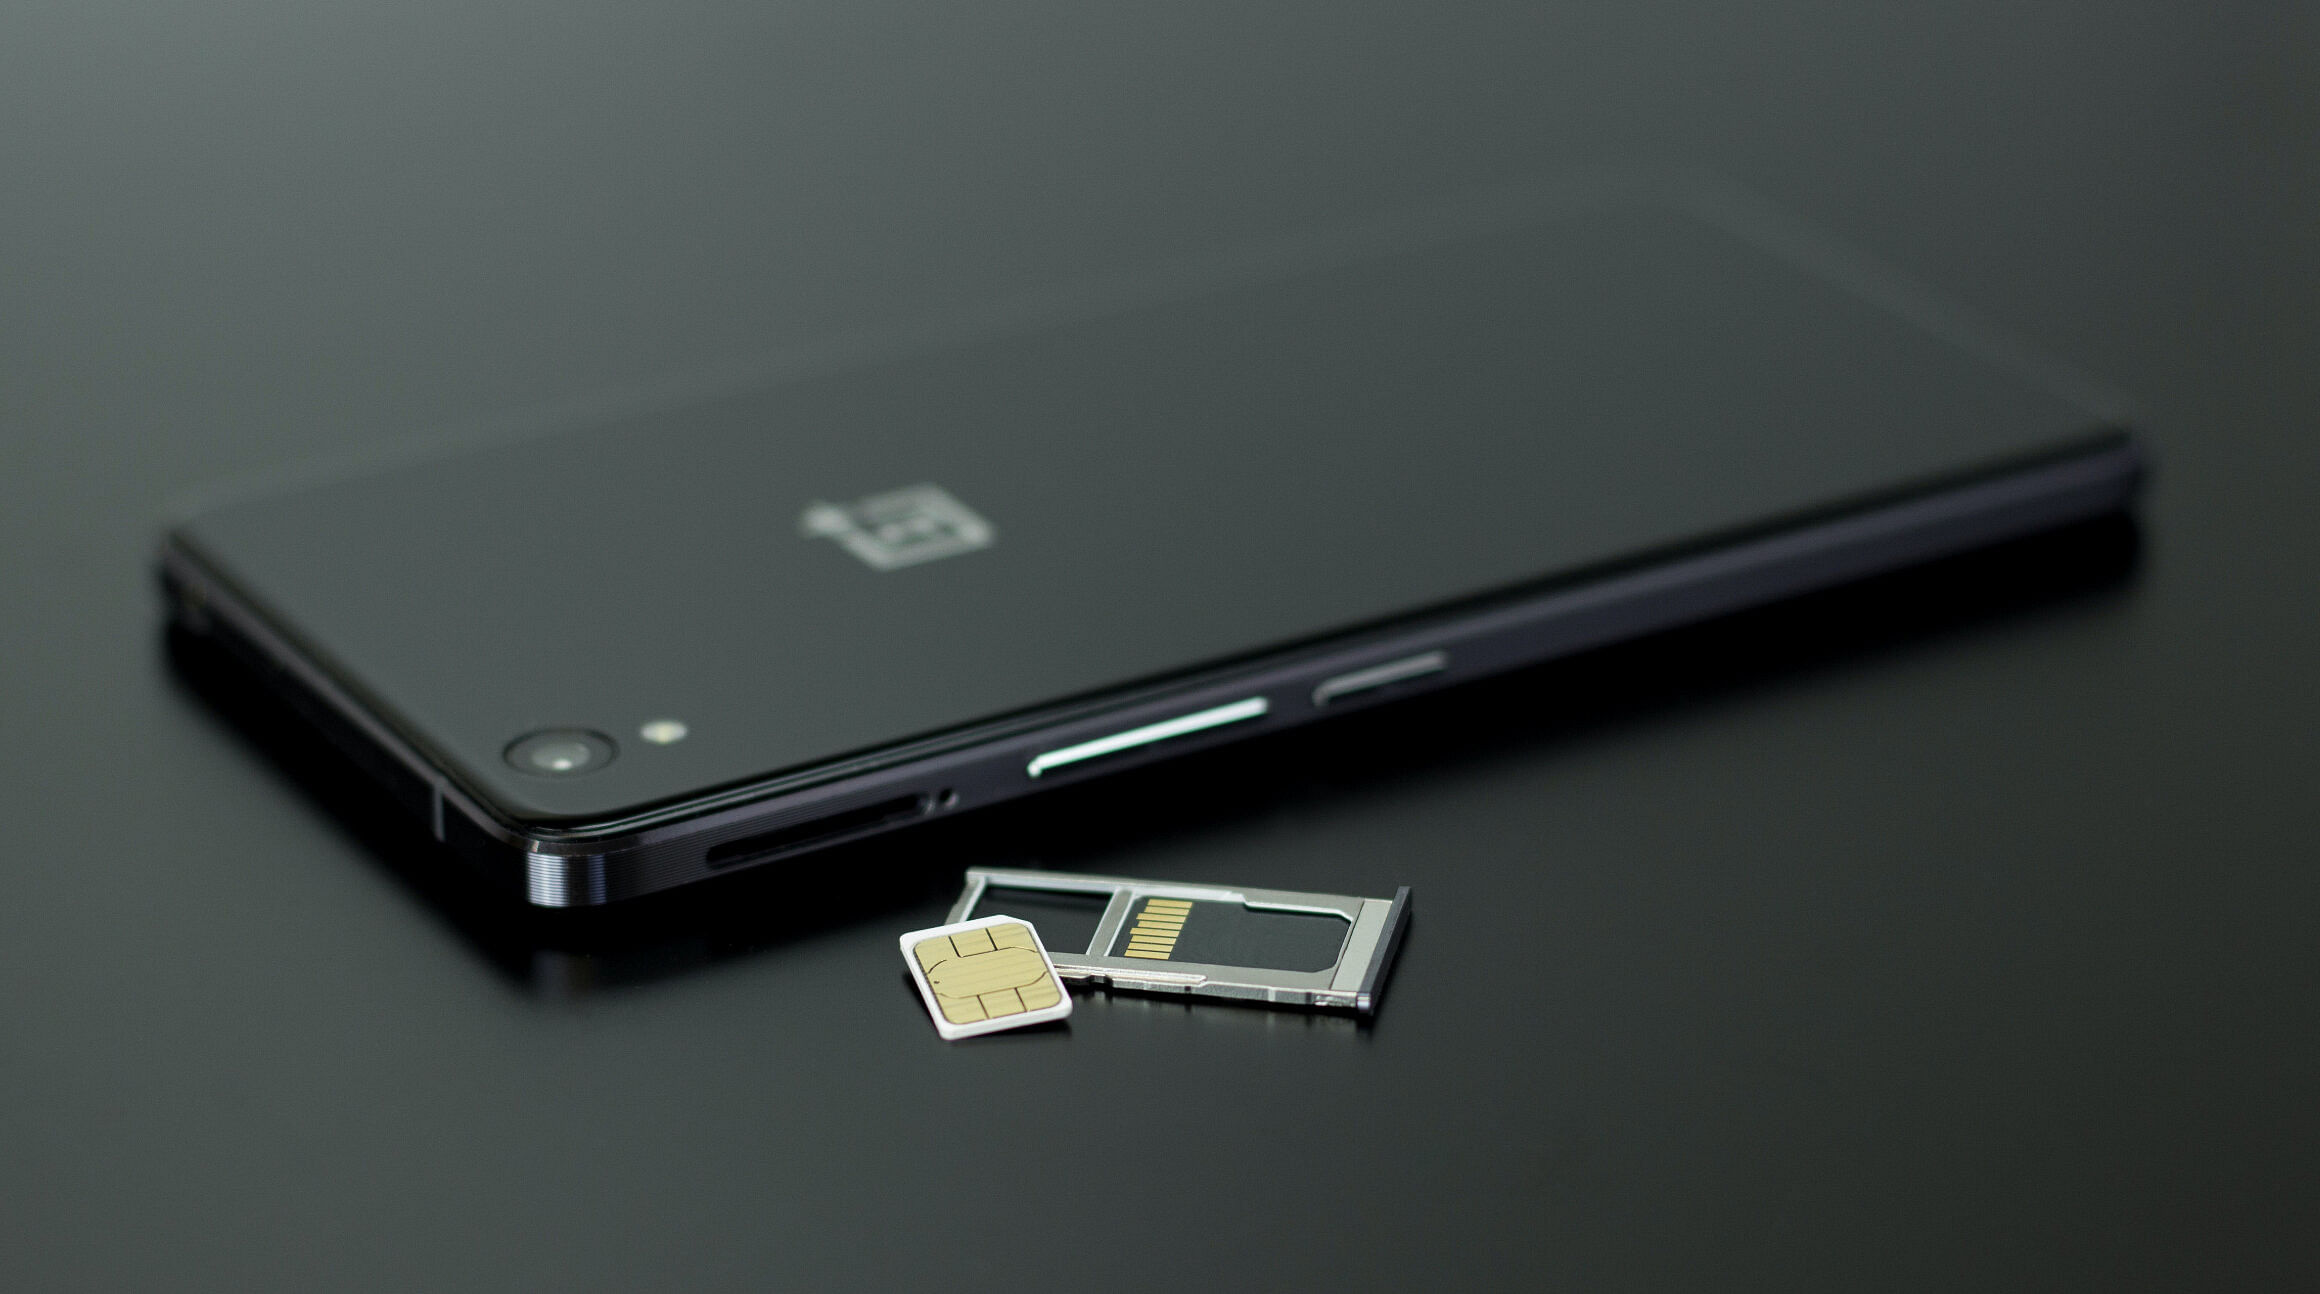 SIM card and SIM card tray beside a smartphone